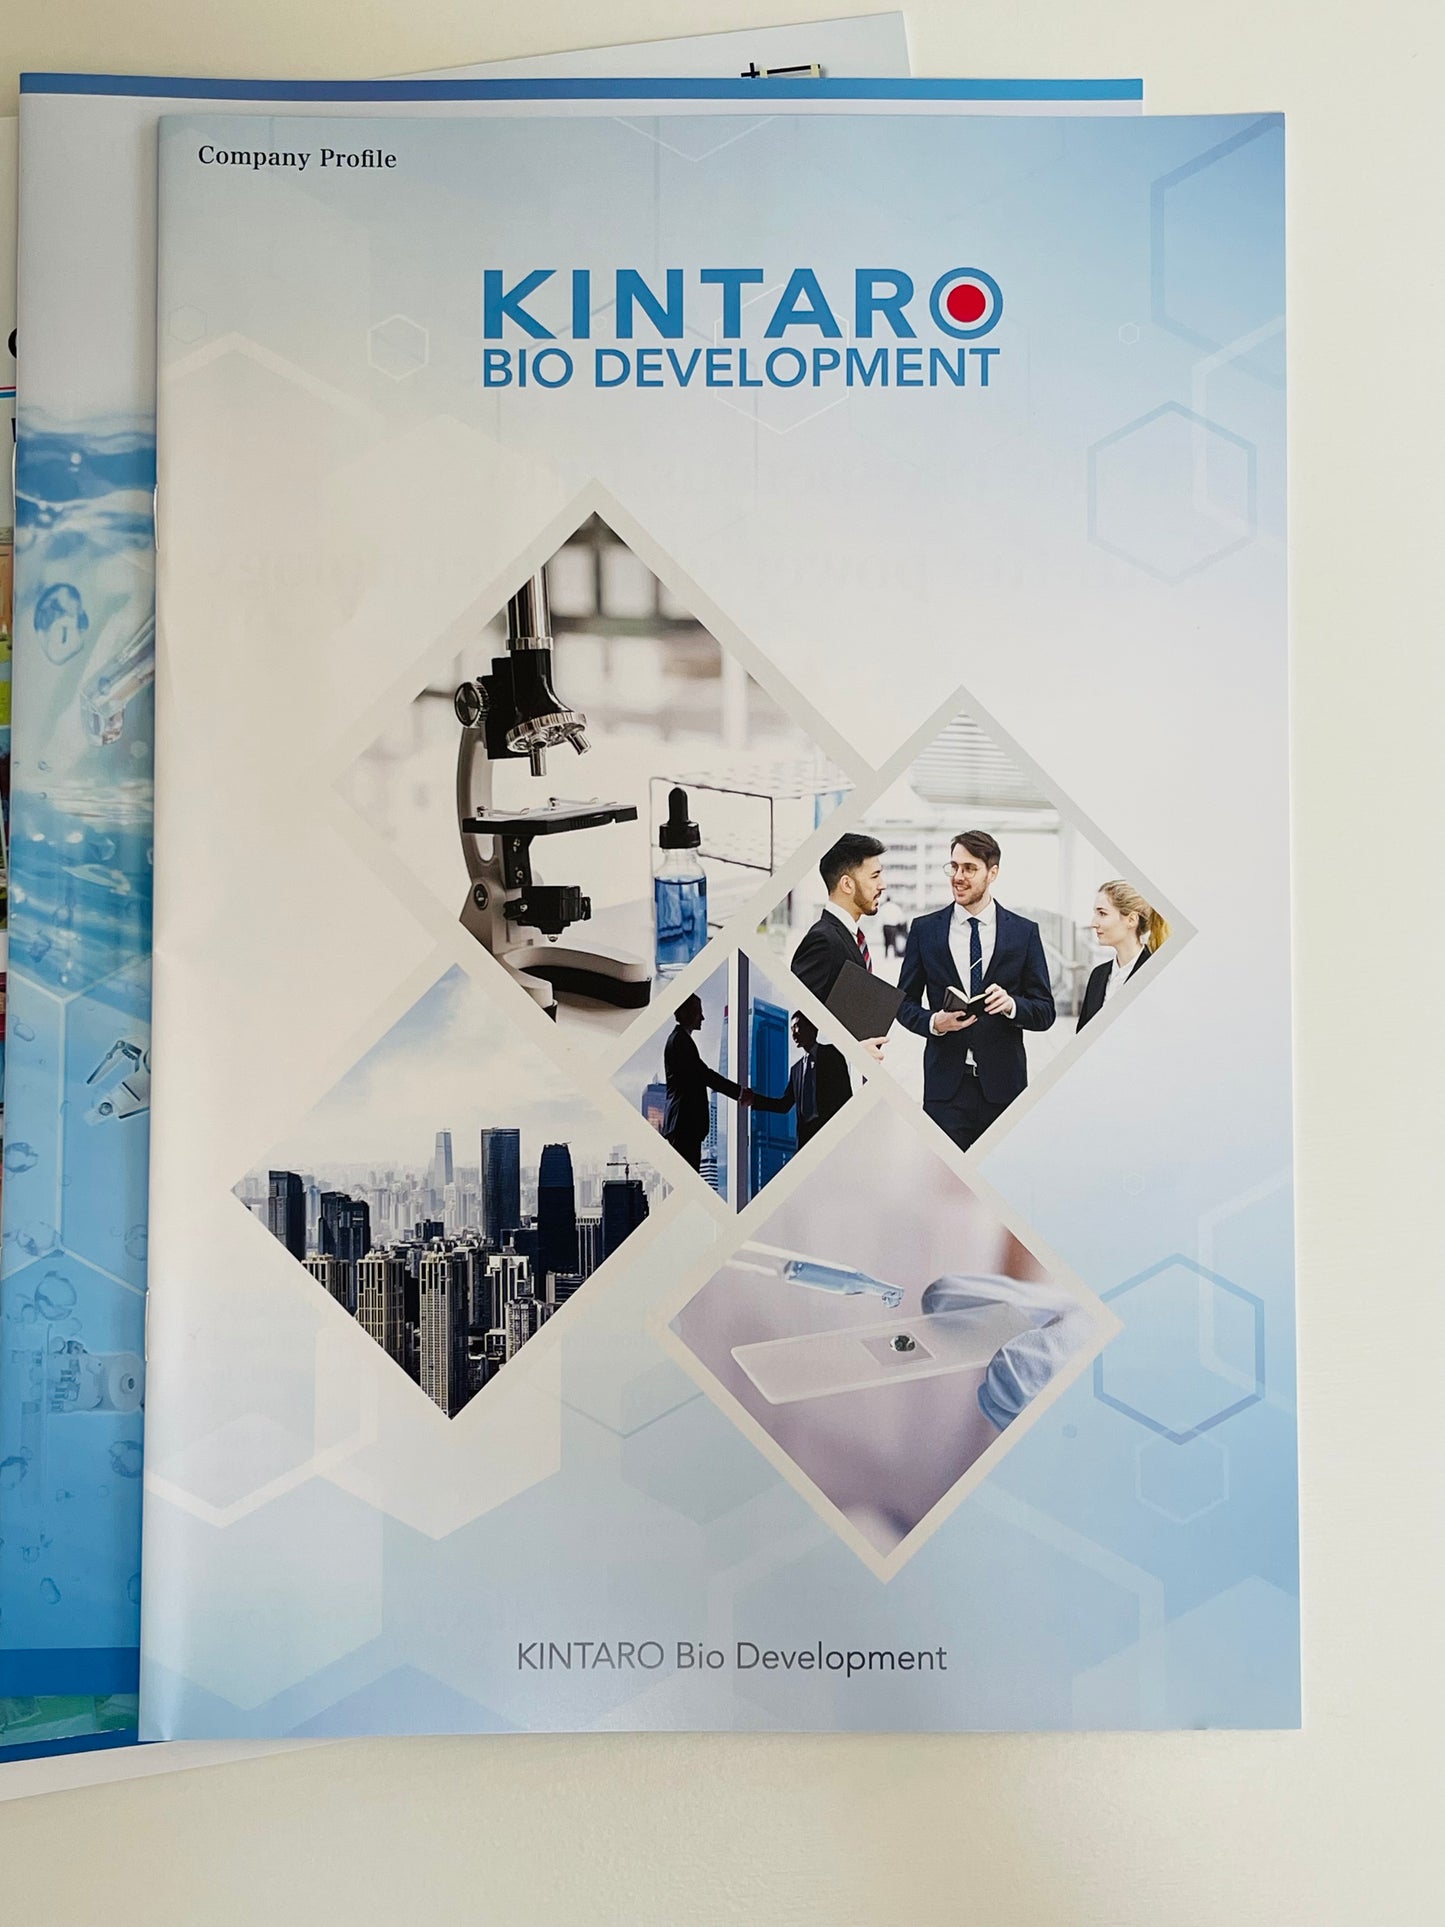 (HARDCOPY) Kintaro Cells Power Company Brochures & Pamplets Set